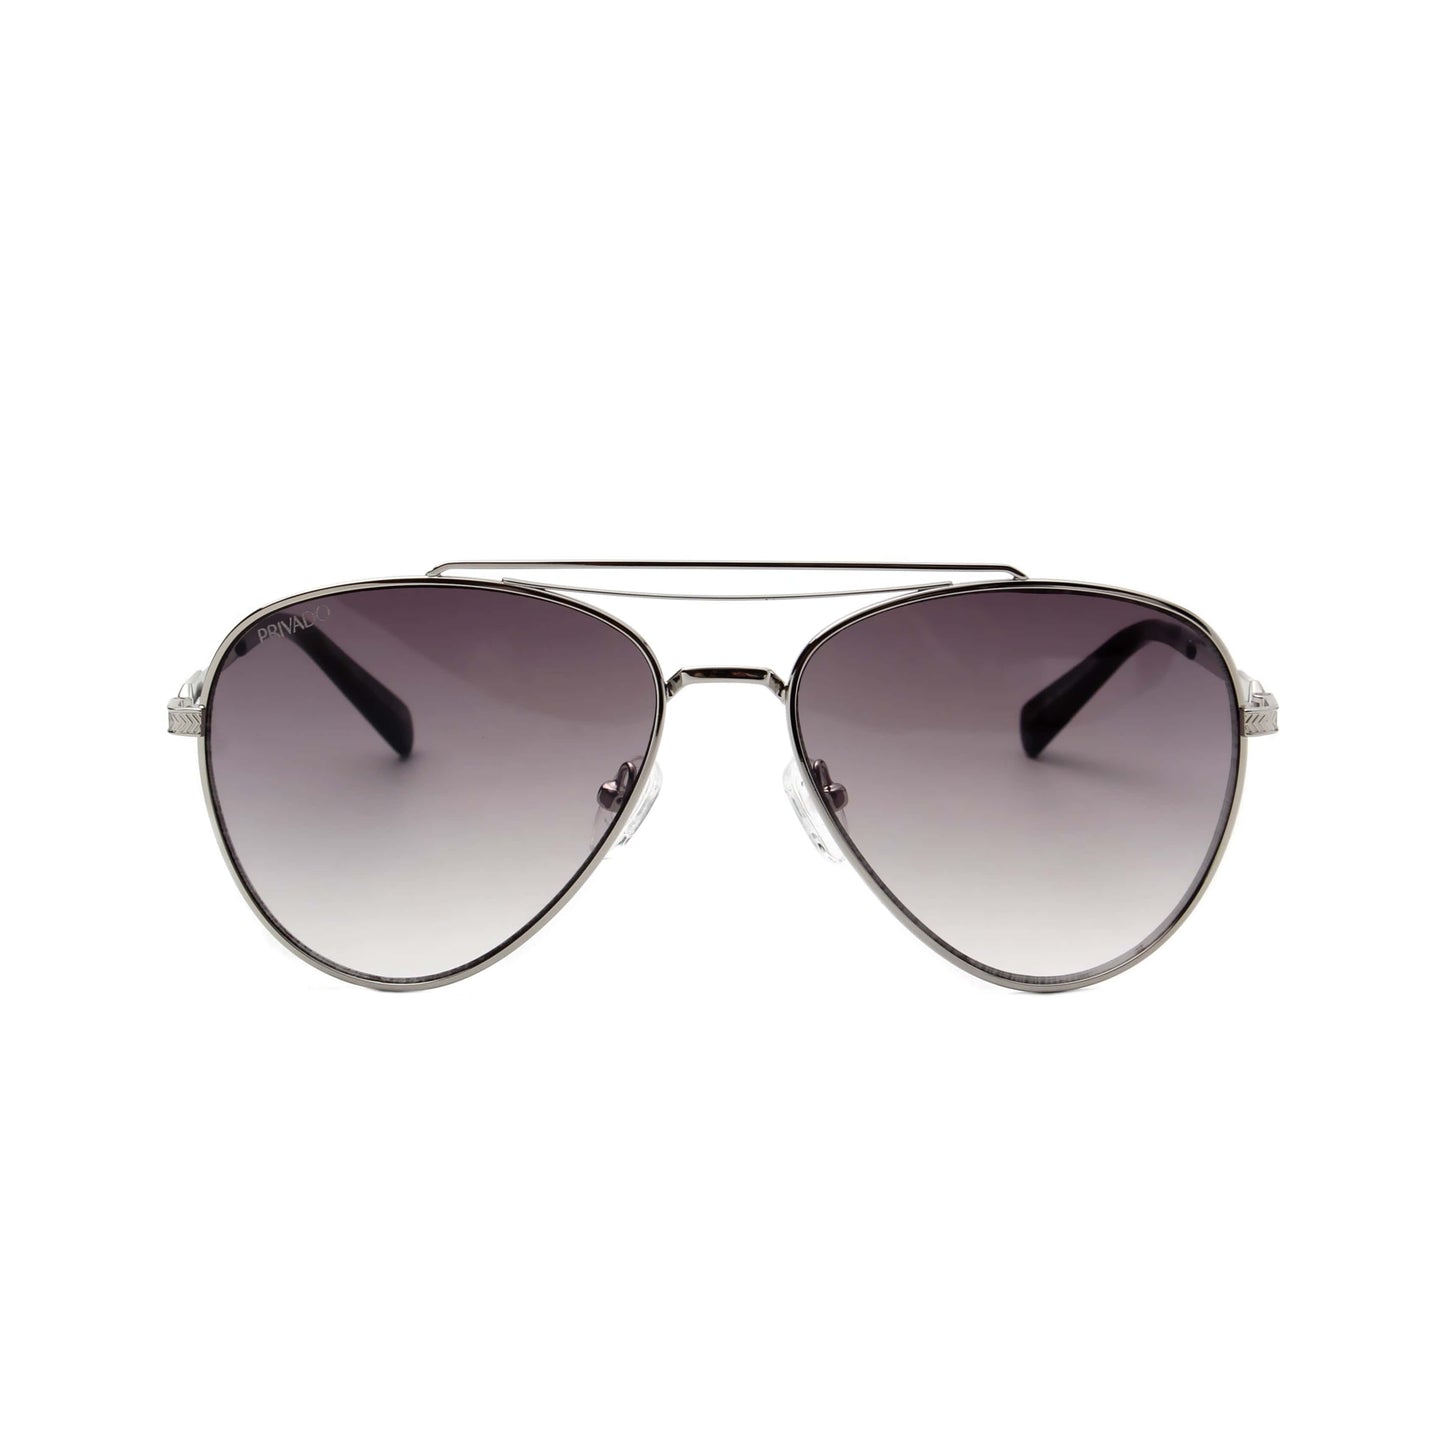 Privado Palau silver aviator sunglasses,metal frame,grey gradient nylon lens,UV400 protected with anti-reflective coating